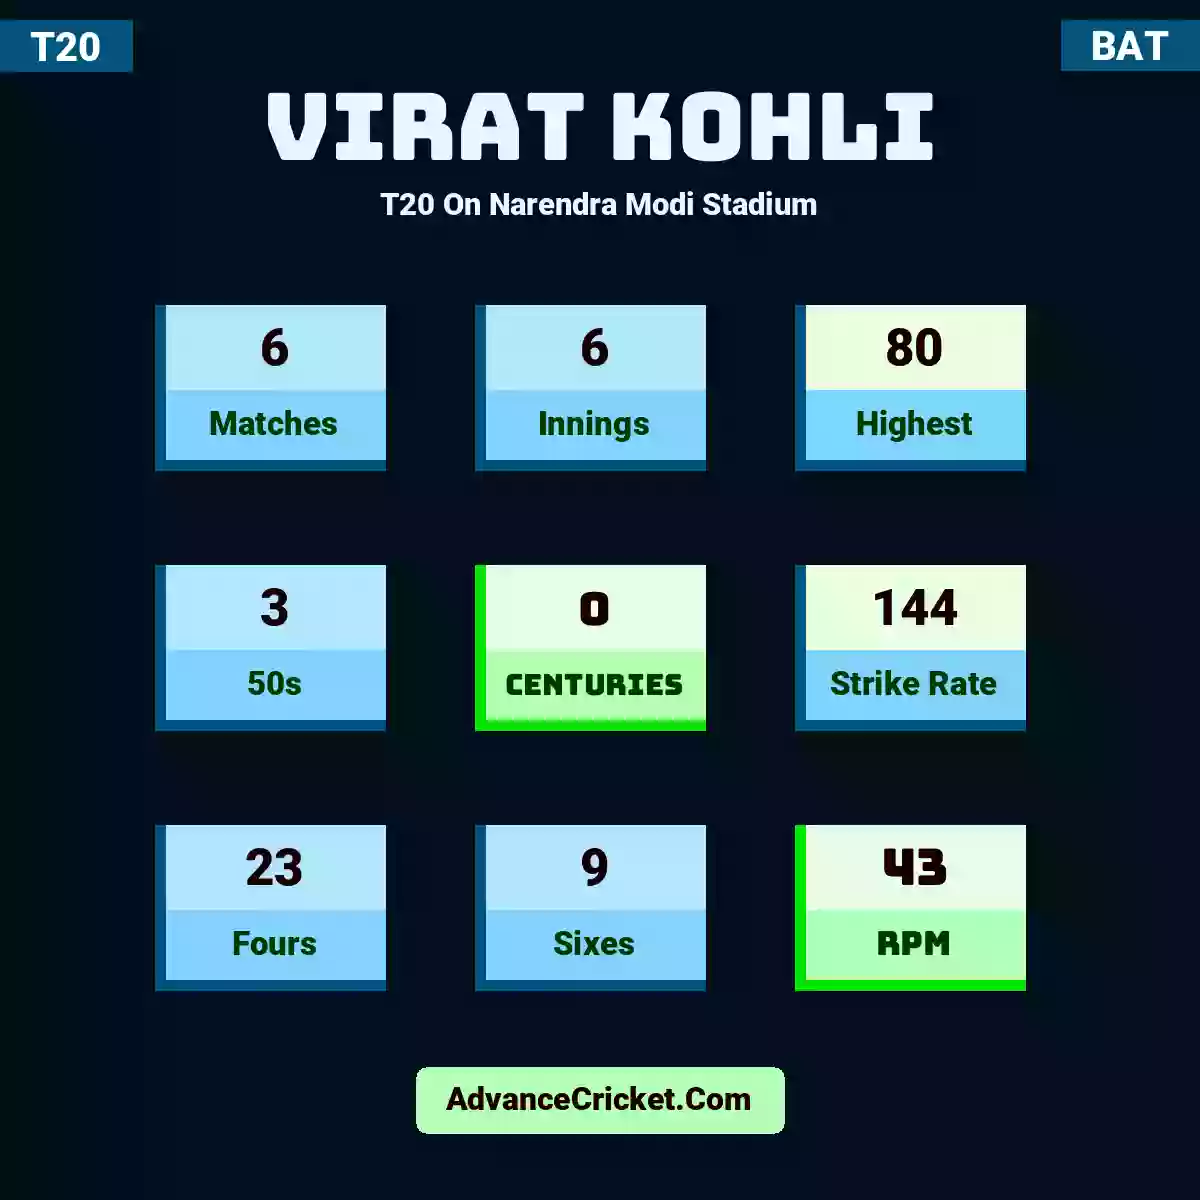 Virat Kohli T20  On Narendra Modi Stadium, Virat Kohli played 6 matches, scored 80 runs as highest, 3 half-centuries, and 0 centuries, with a strike rate of 144. V.Kohli hit 23 fours and 9 sixes, with an RPM of 43.